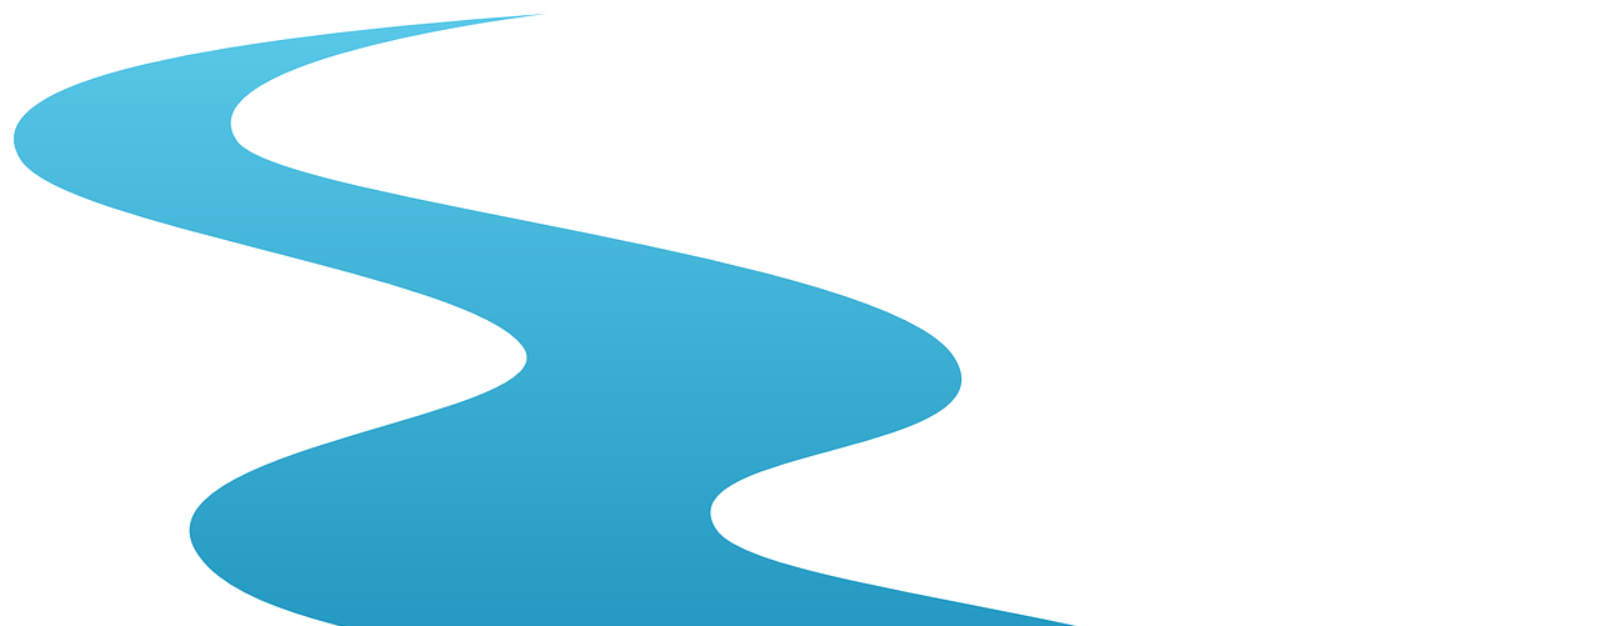 River Png Transparent - Free Logo Image